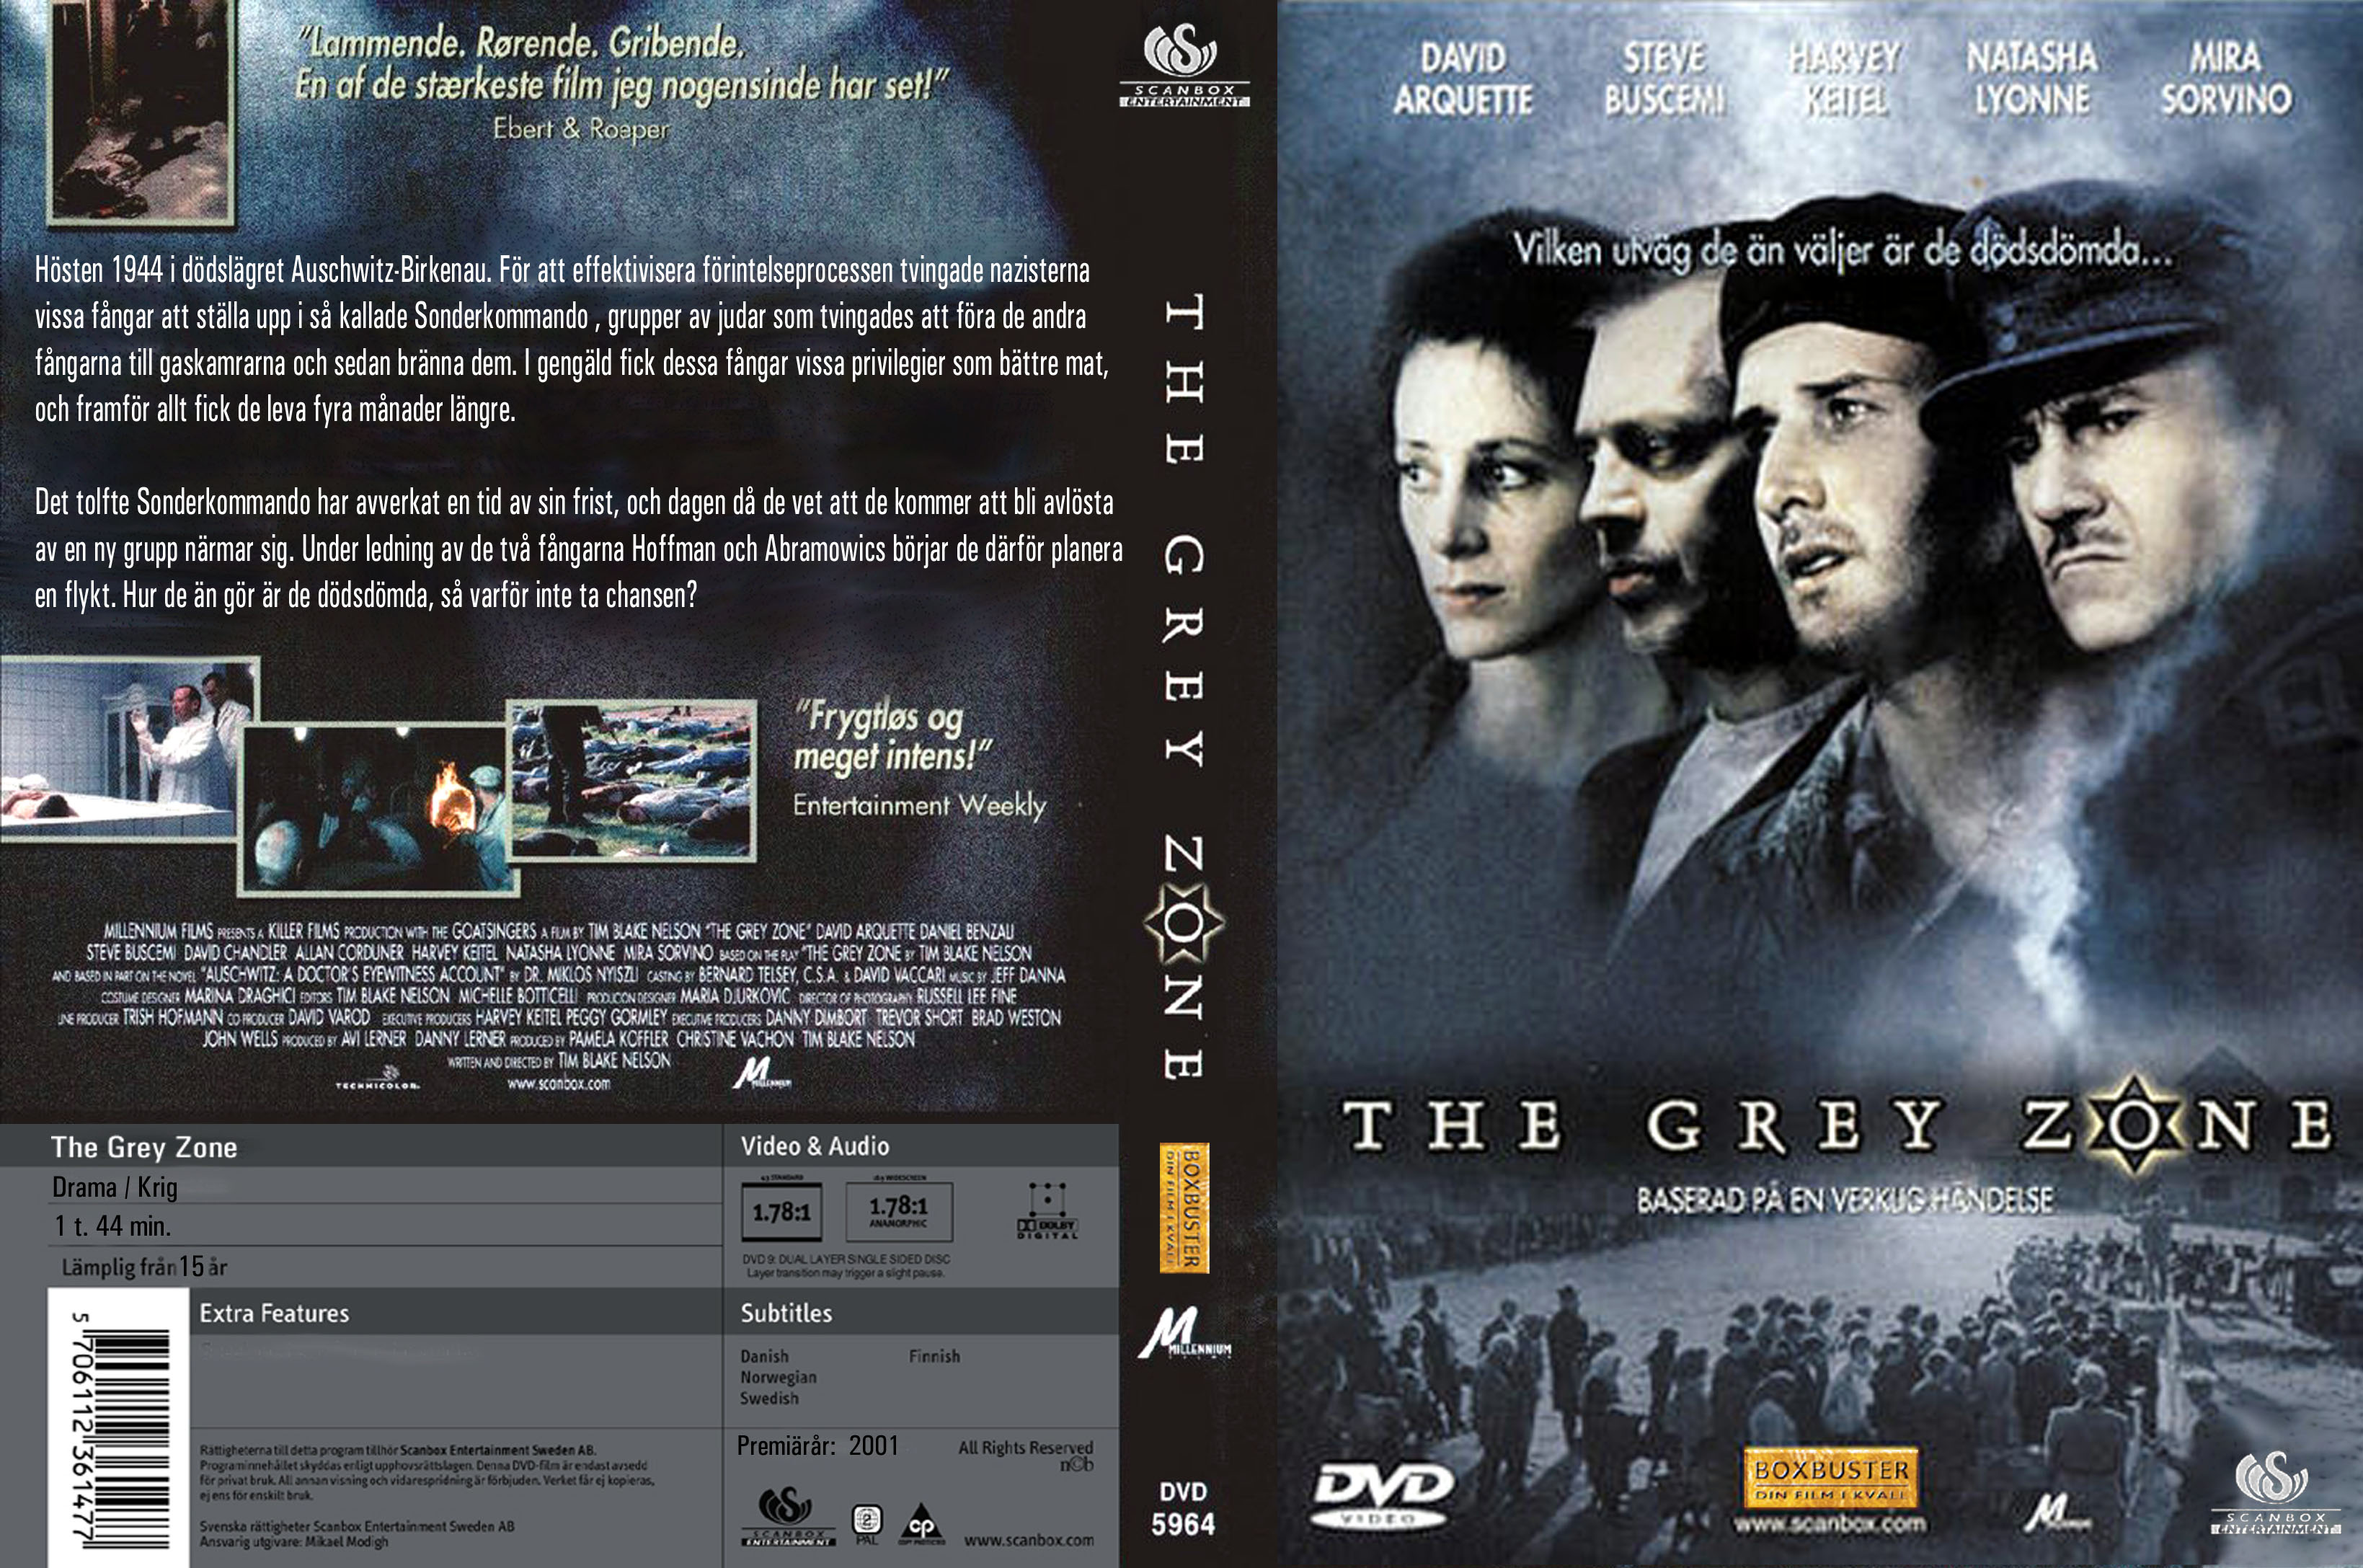 The greyzone 2001